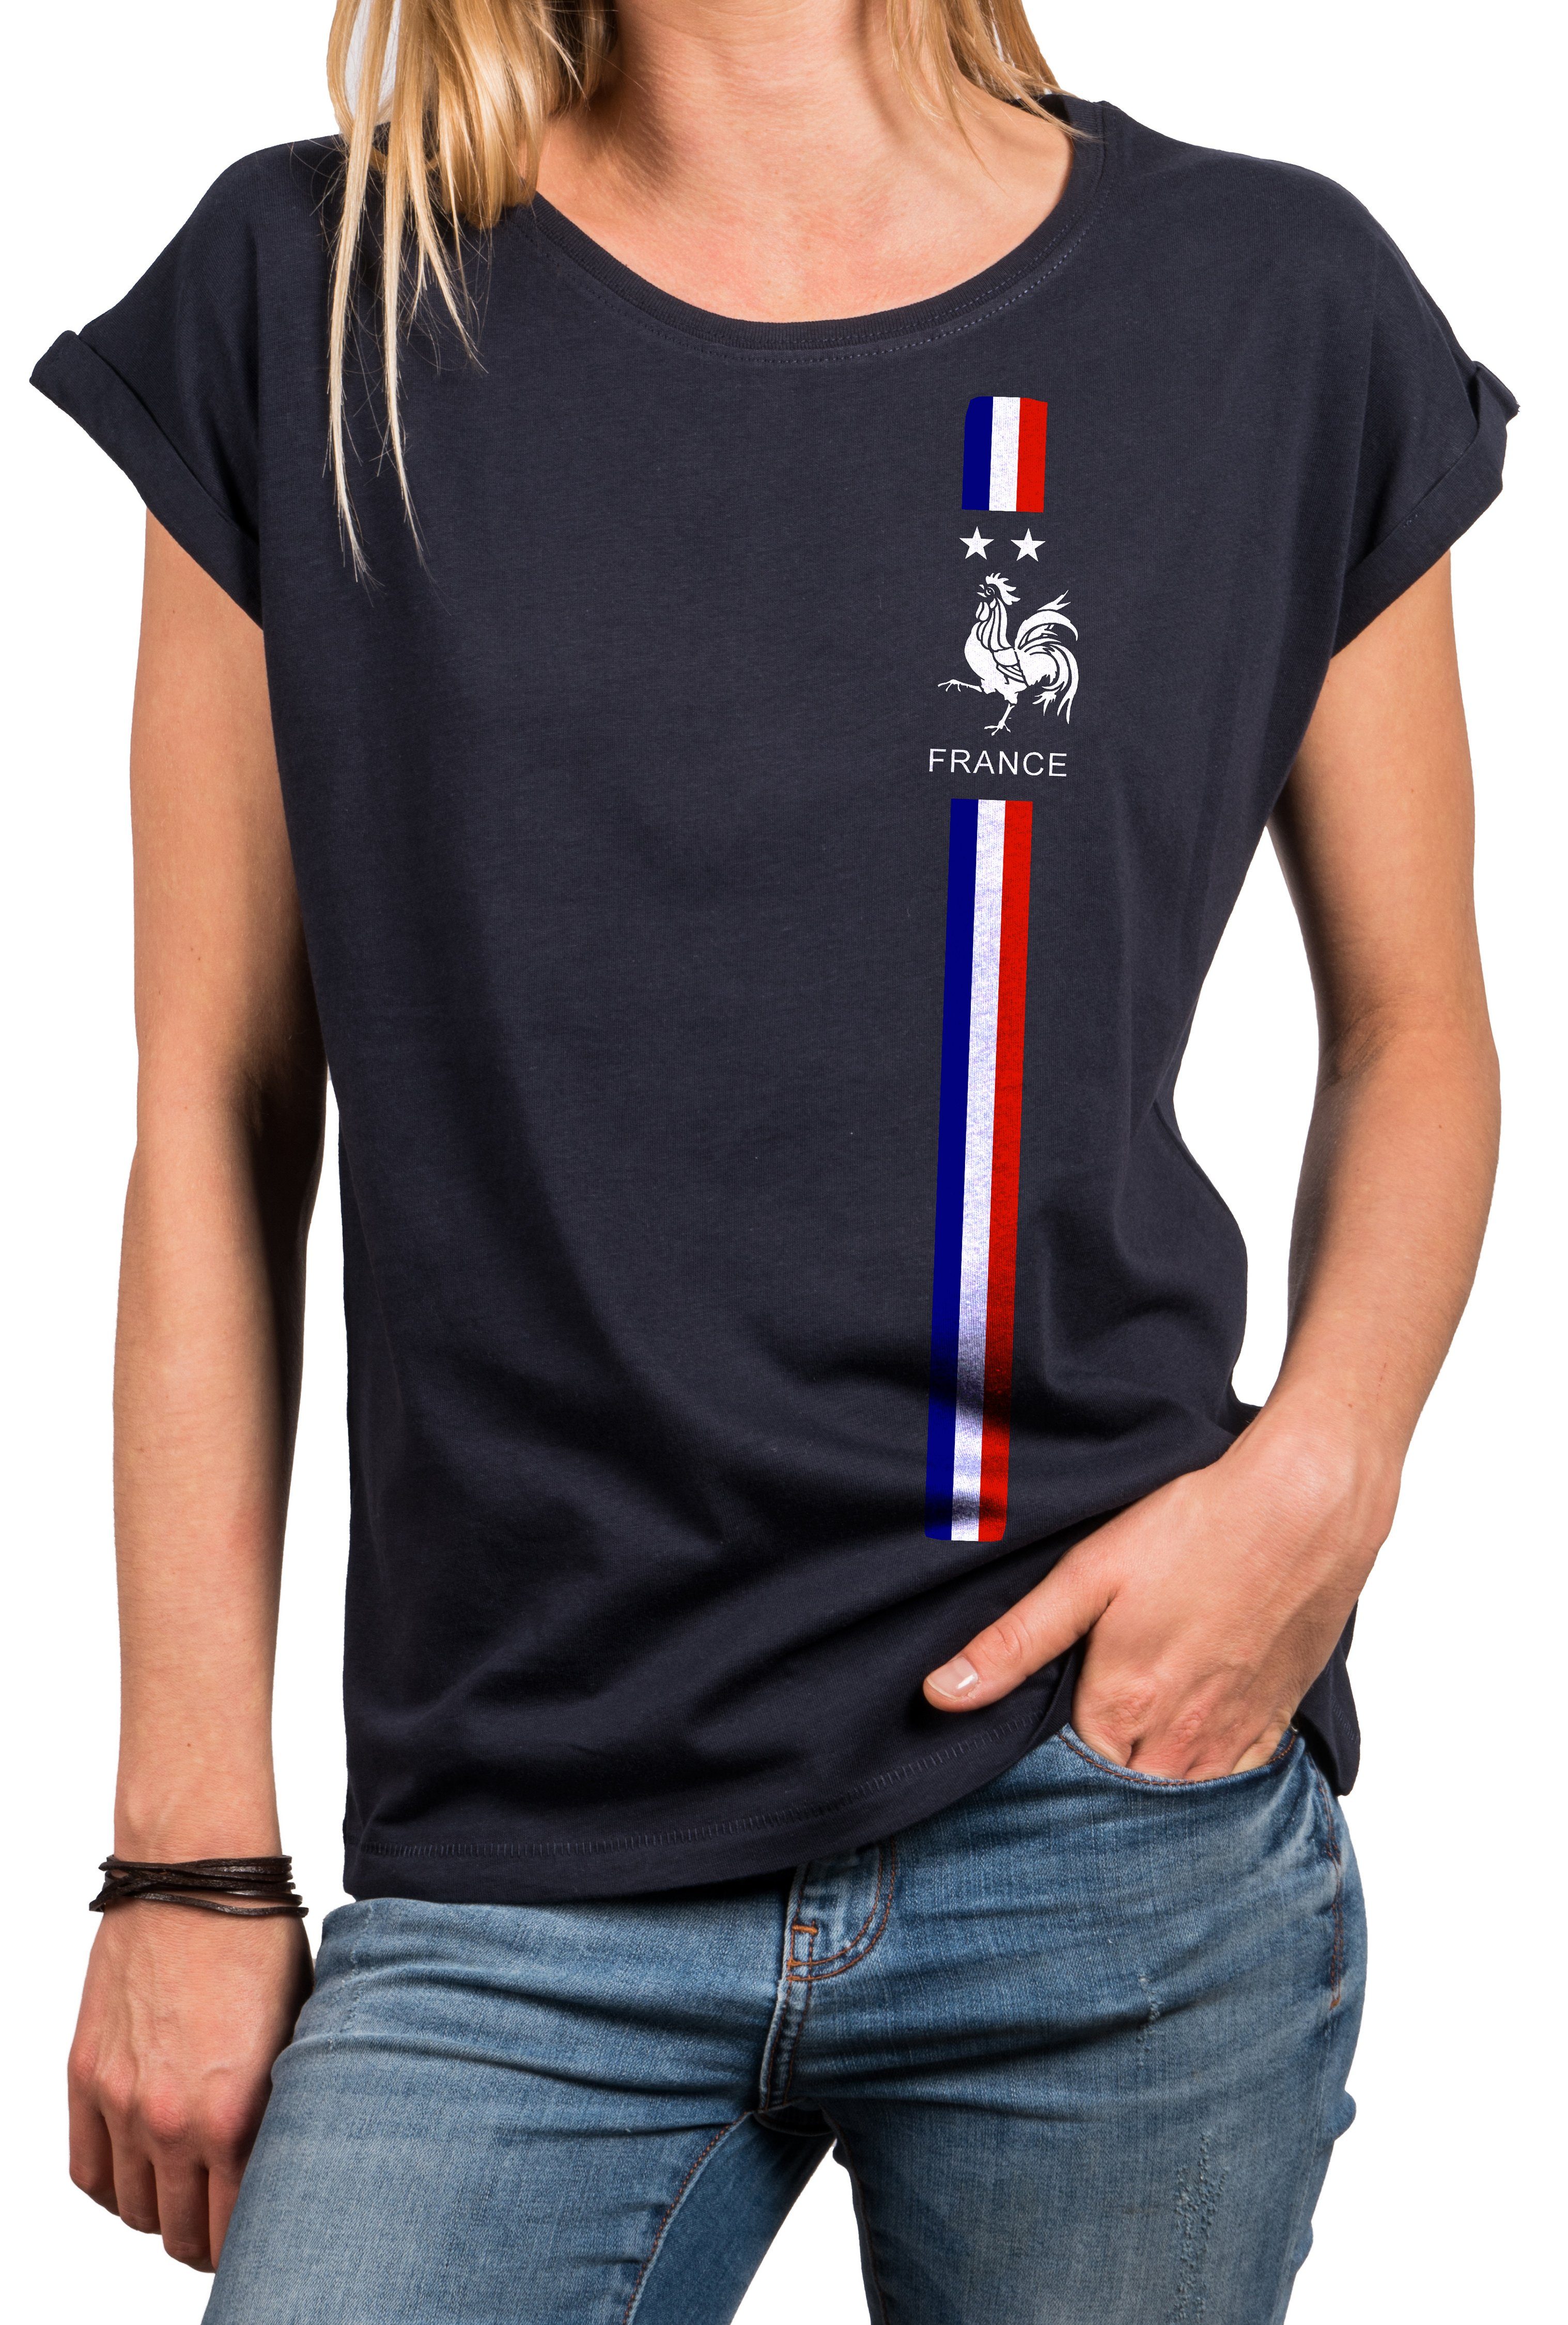 Blau Print-Shirt Top MAKAYA Trikot Tunika, Frankreich Fahne Baumwolle Kurzarmshirt Damen Flagge große Größen